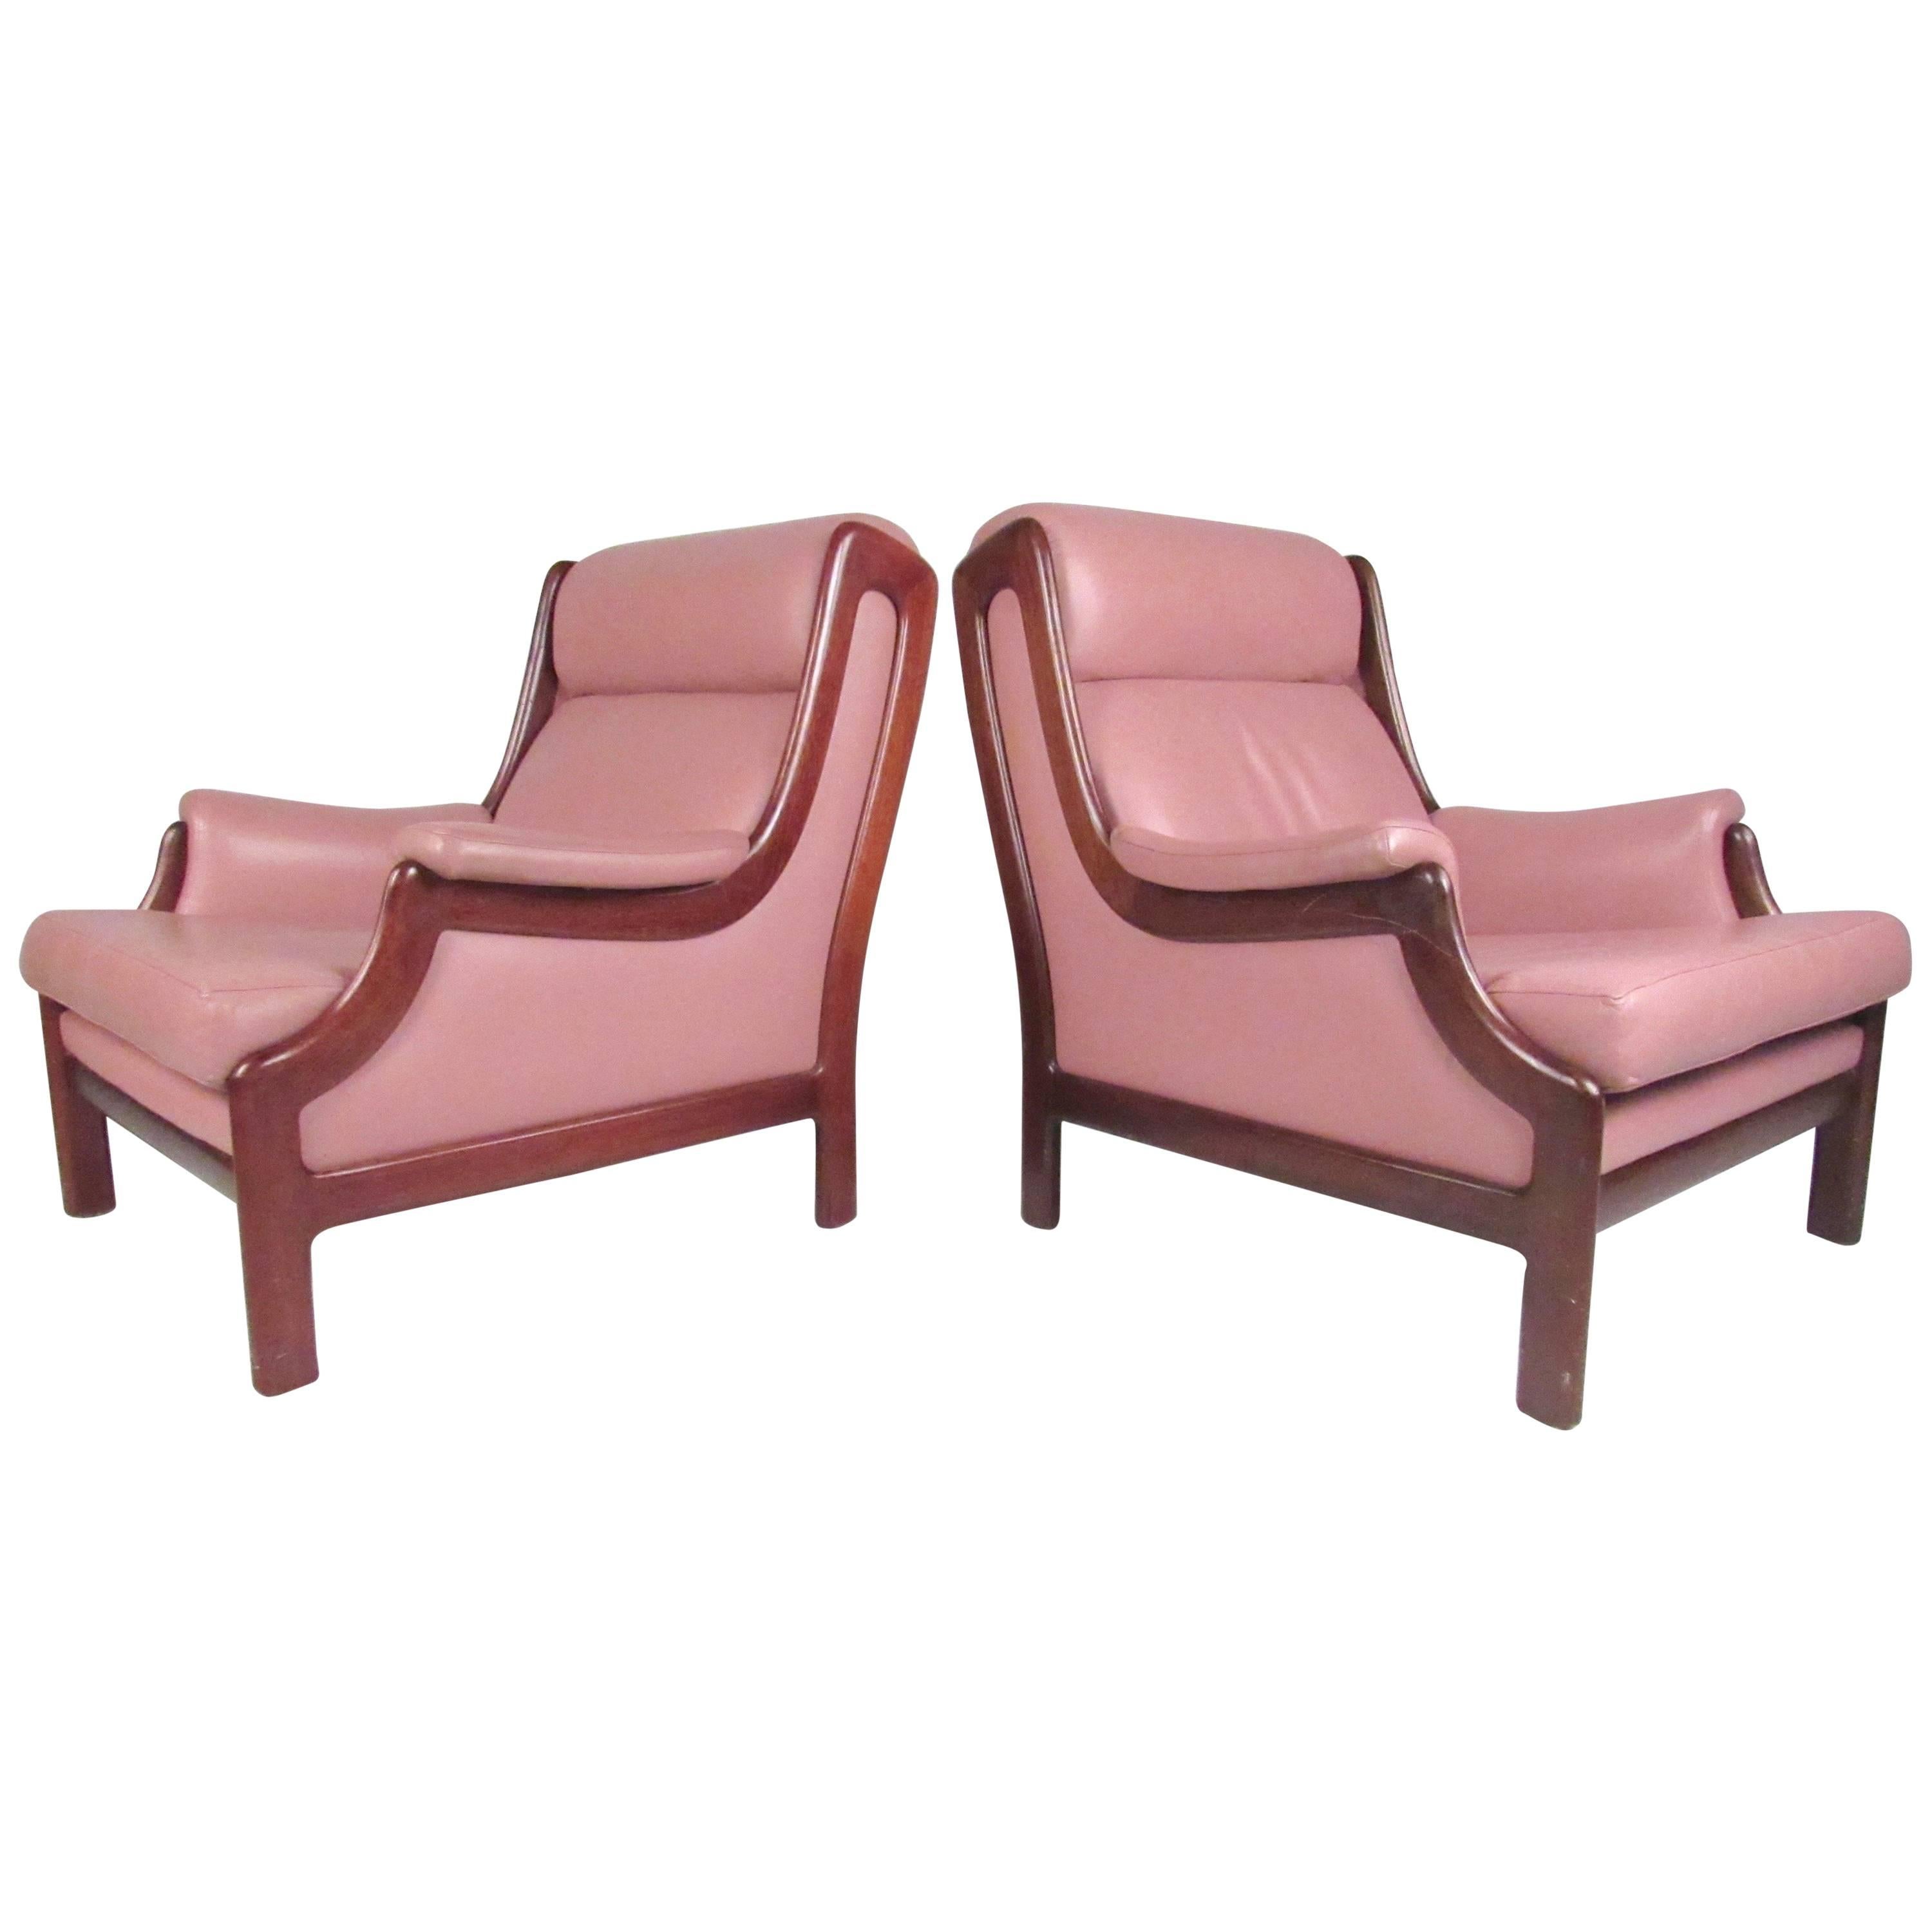 Scandinavian Modern Teak and Leather Lounge Chairs